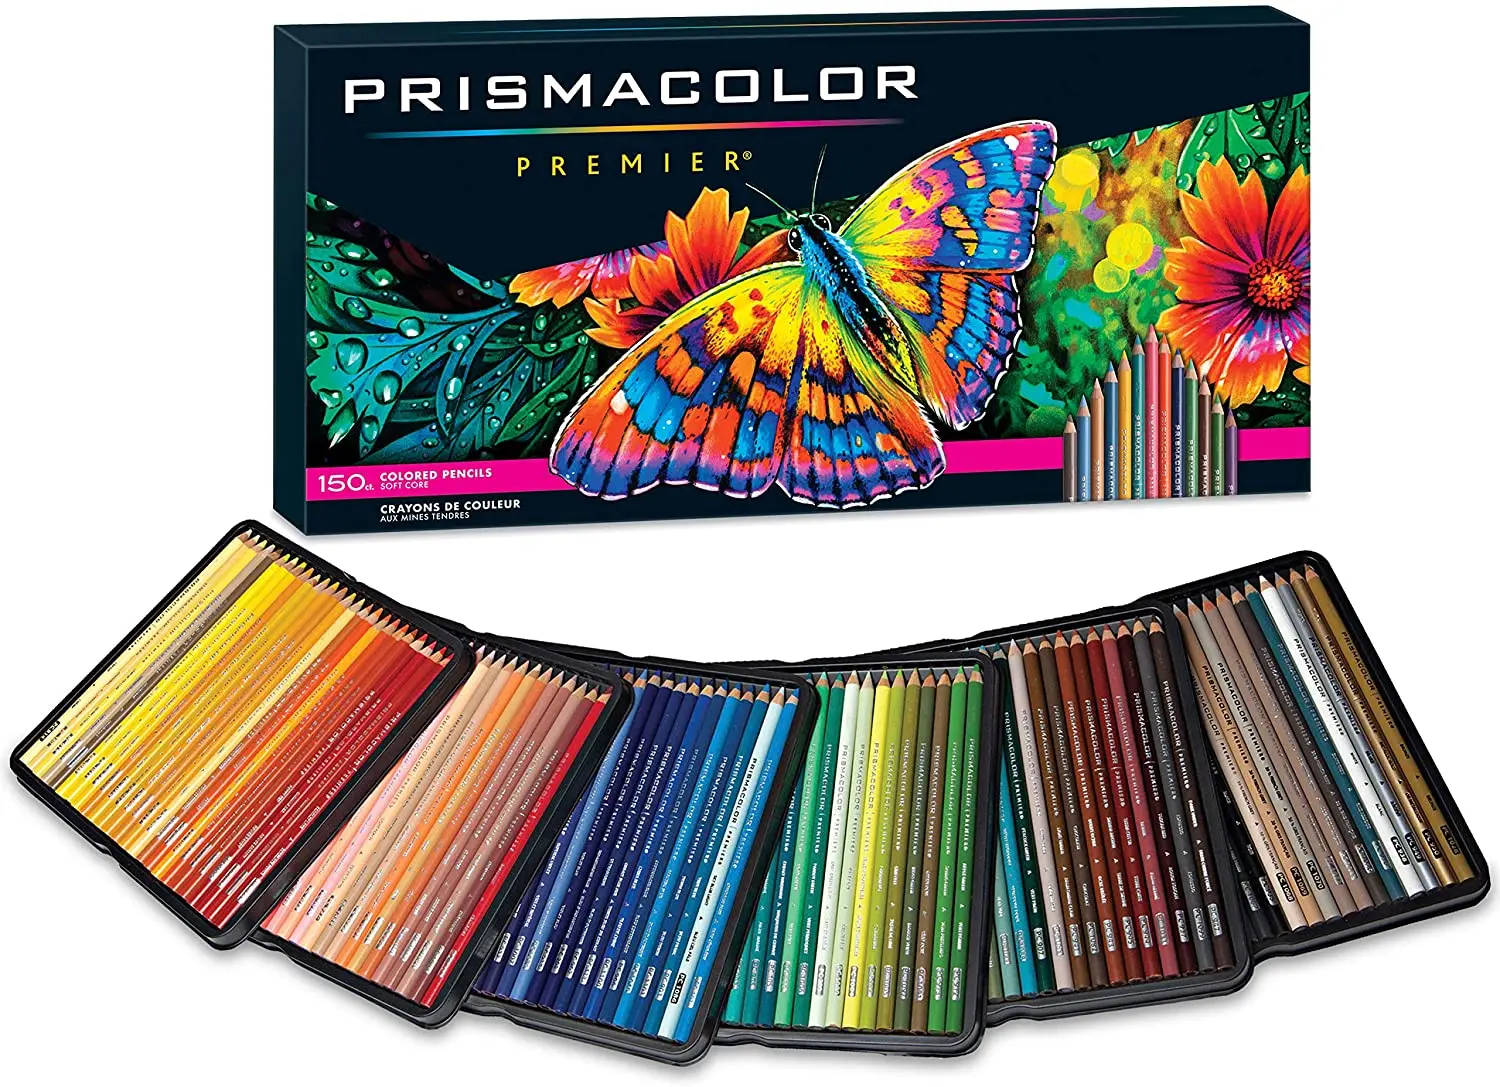 

Prismacolor Premier Colored Pencils | Art Supplies for Drawing, Sketching, Adult Coloring | Soft Core Color Pencils, 150 Pack